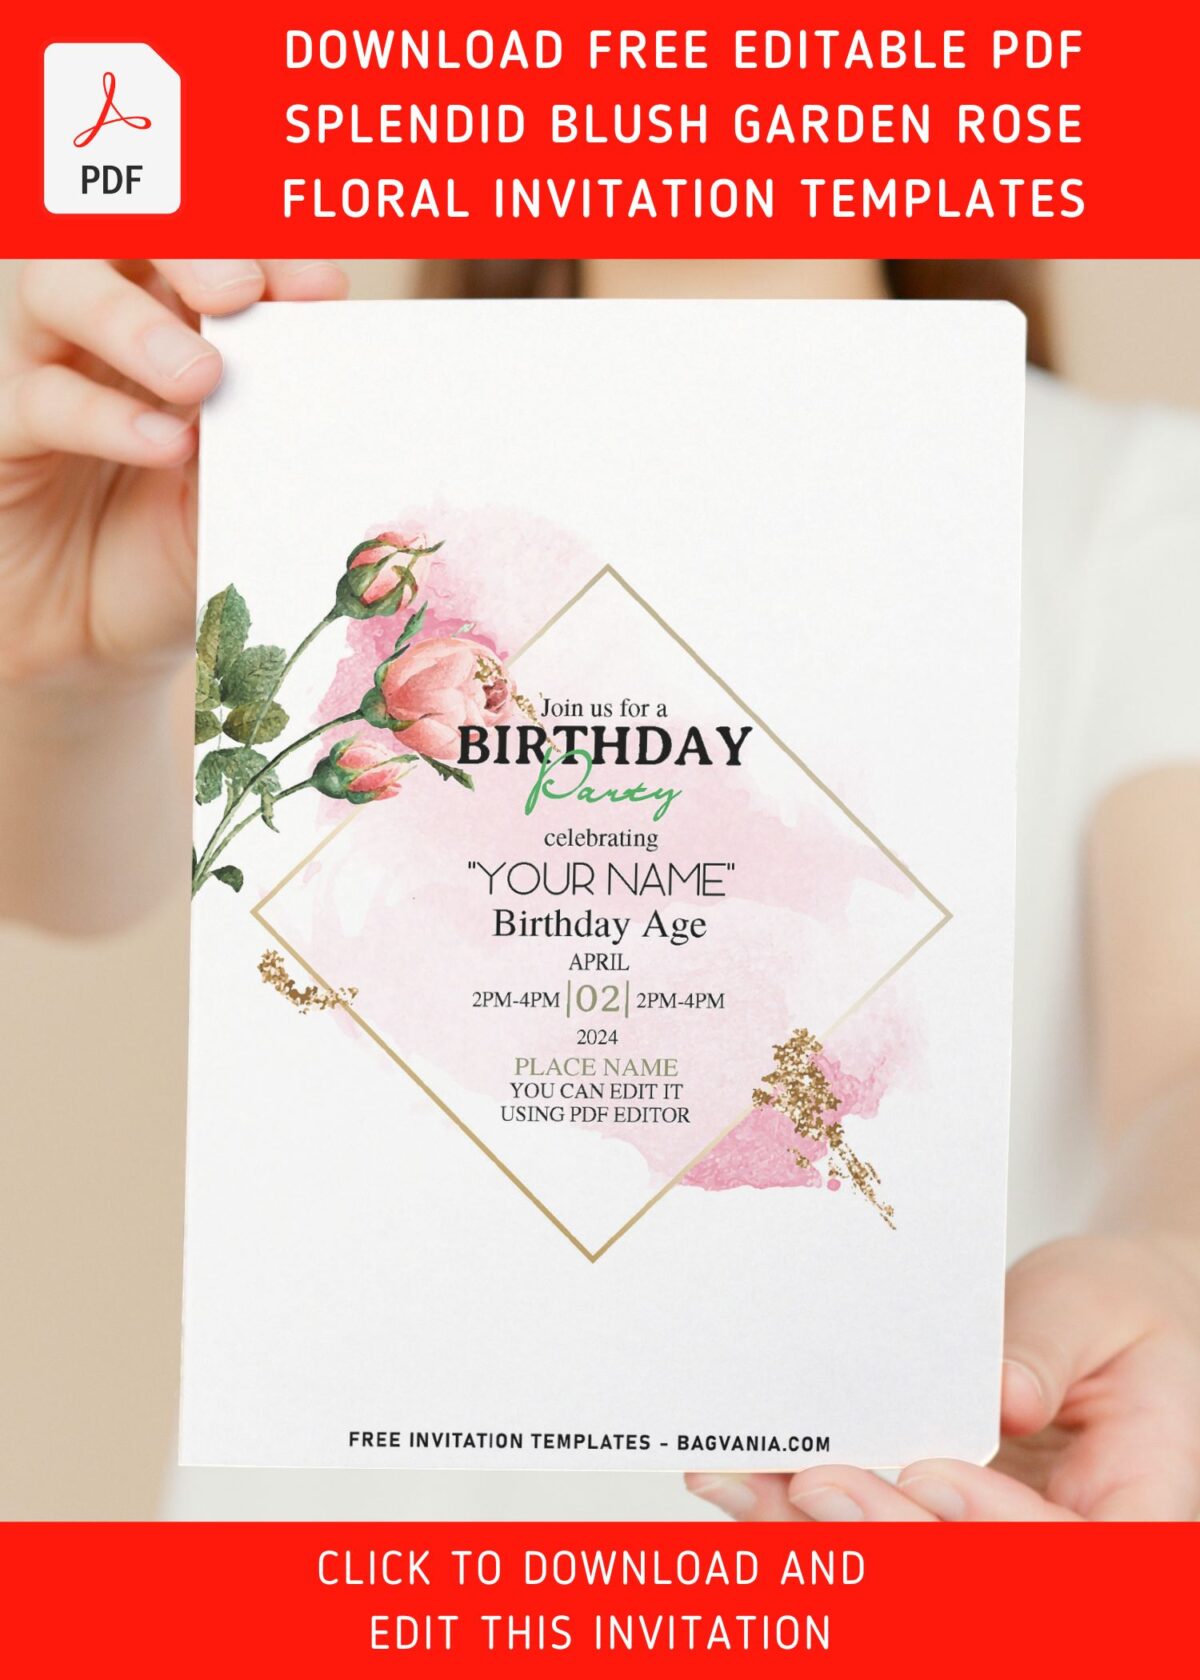 (Free Editable PDF) Splendid Blush Rose Garden Birthday Party Invitation Templates with gorgeous floral frame